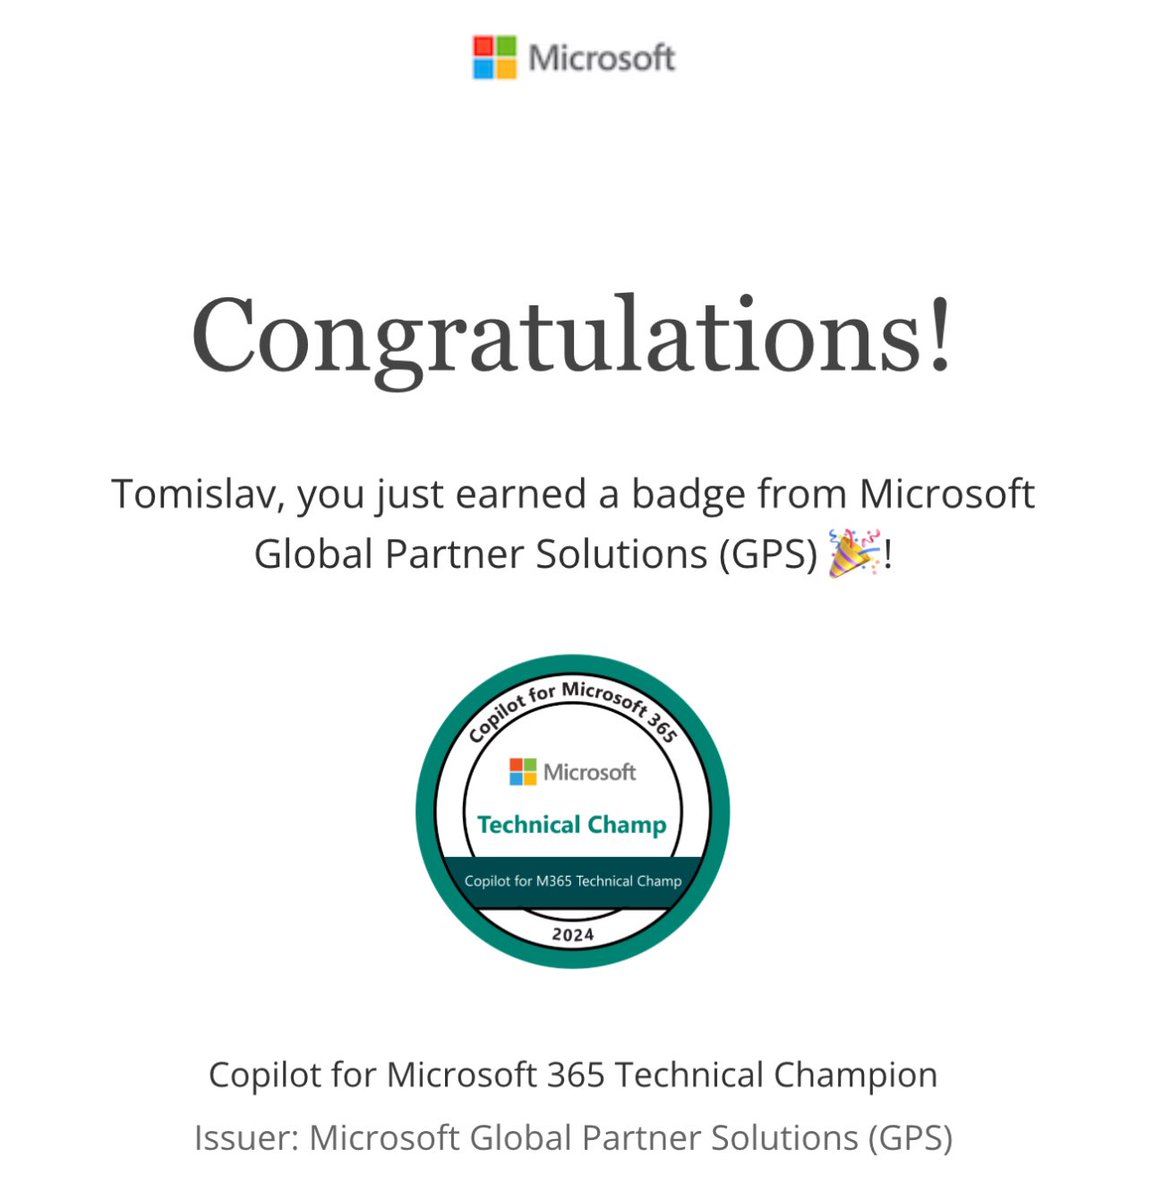 #Copilot for #Microsoft365 Technical Champ